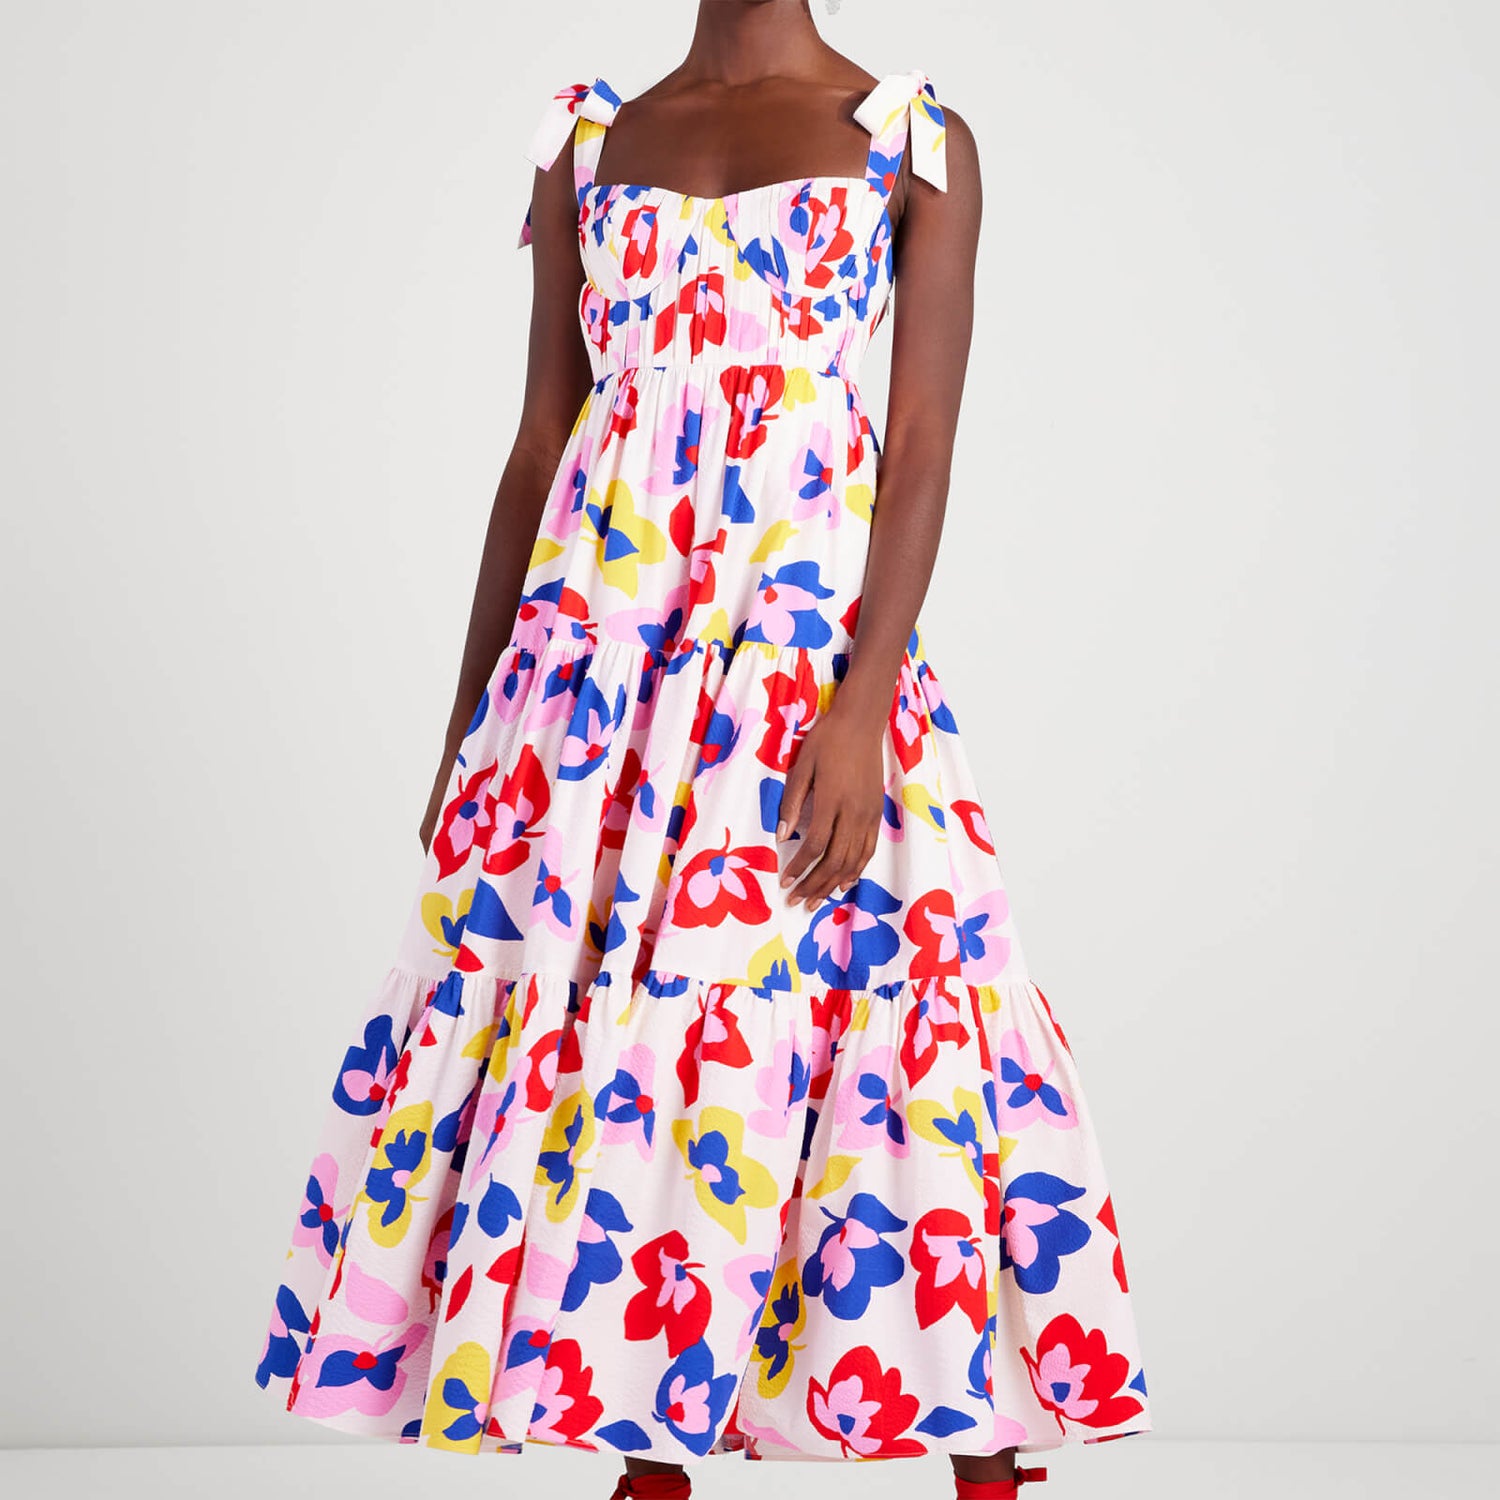 Kate Spade New York Women's Summer Flowers Tiered Dress - Cream Multi - UK 8